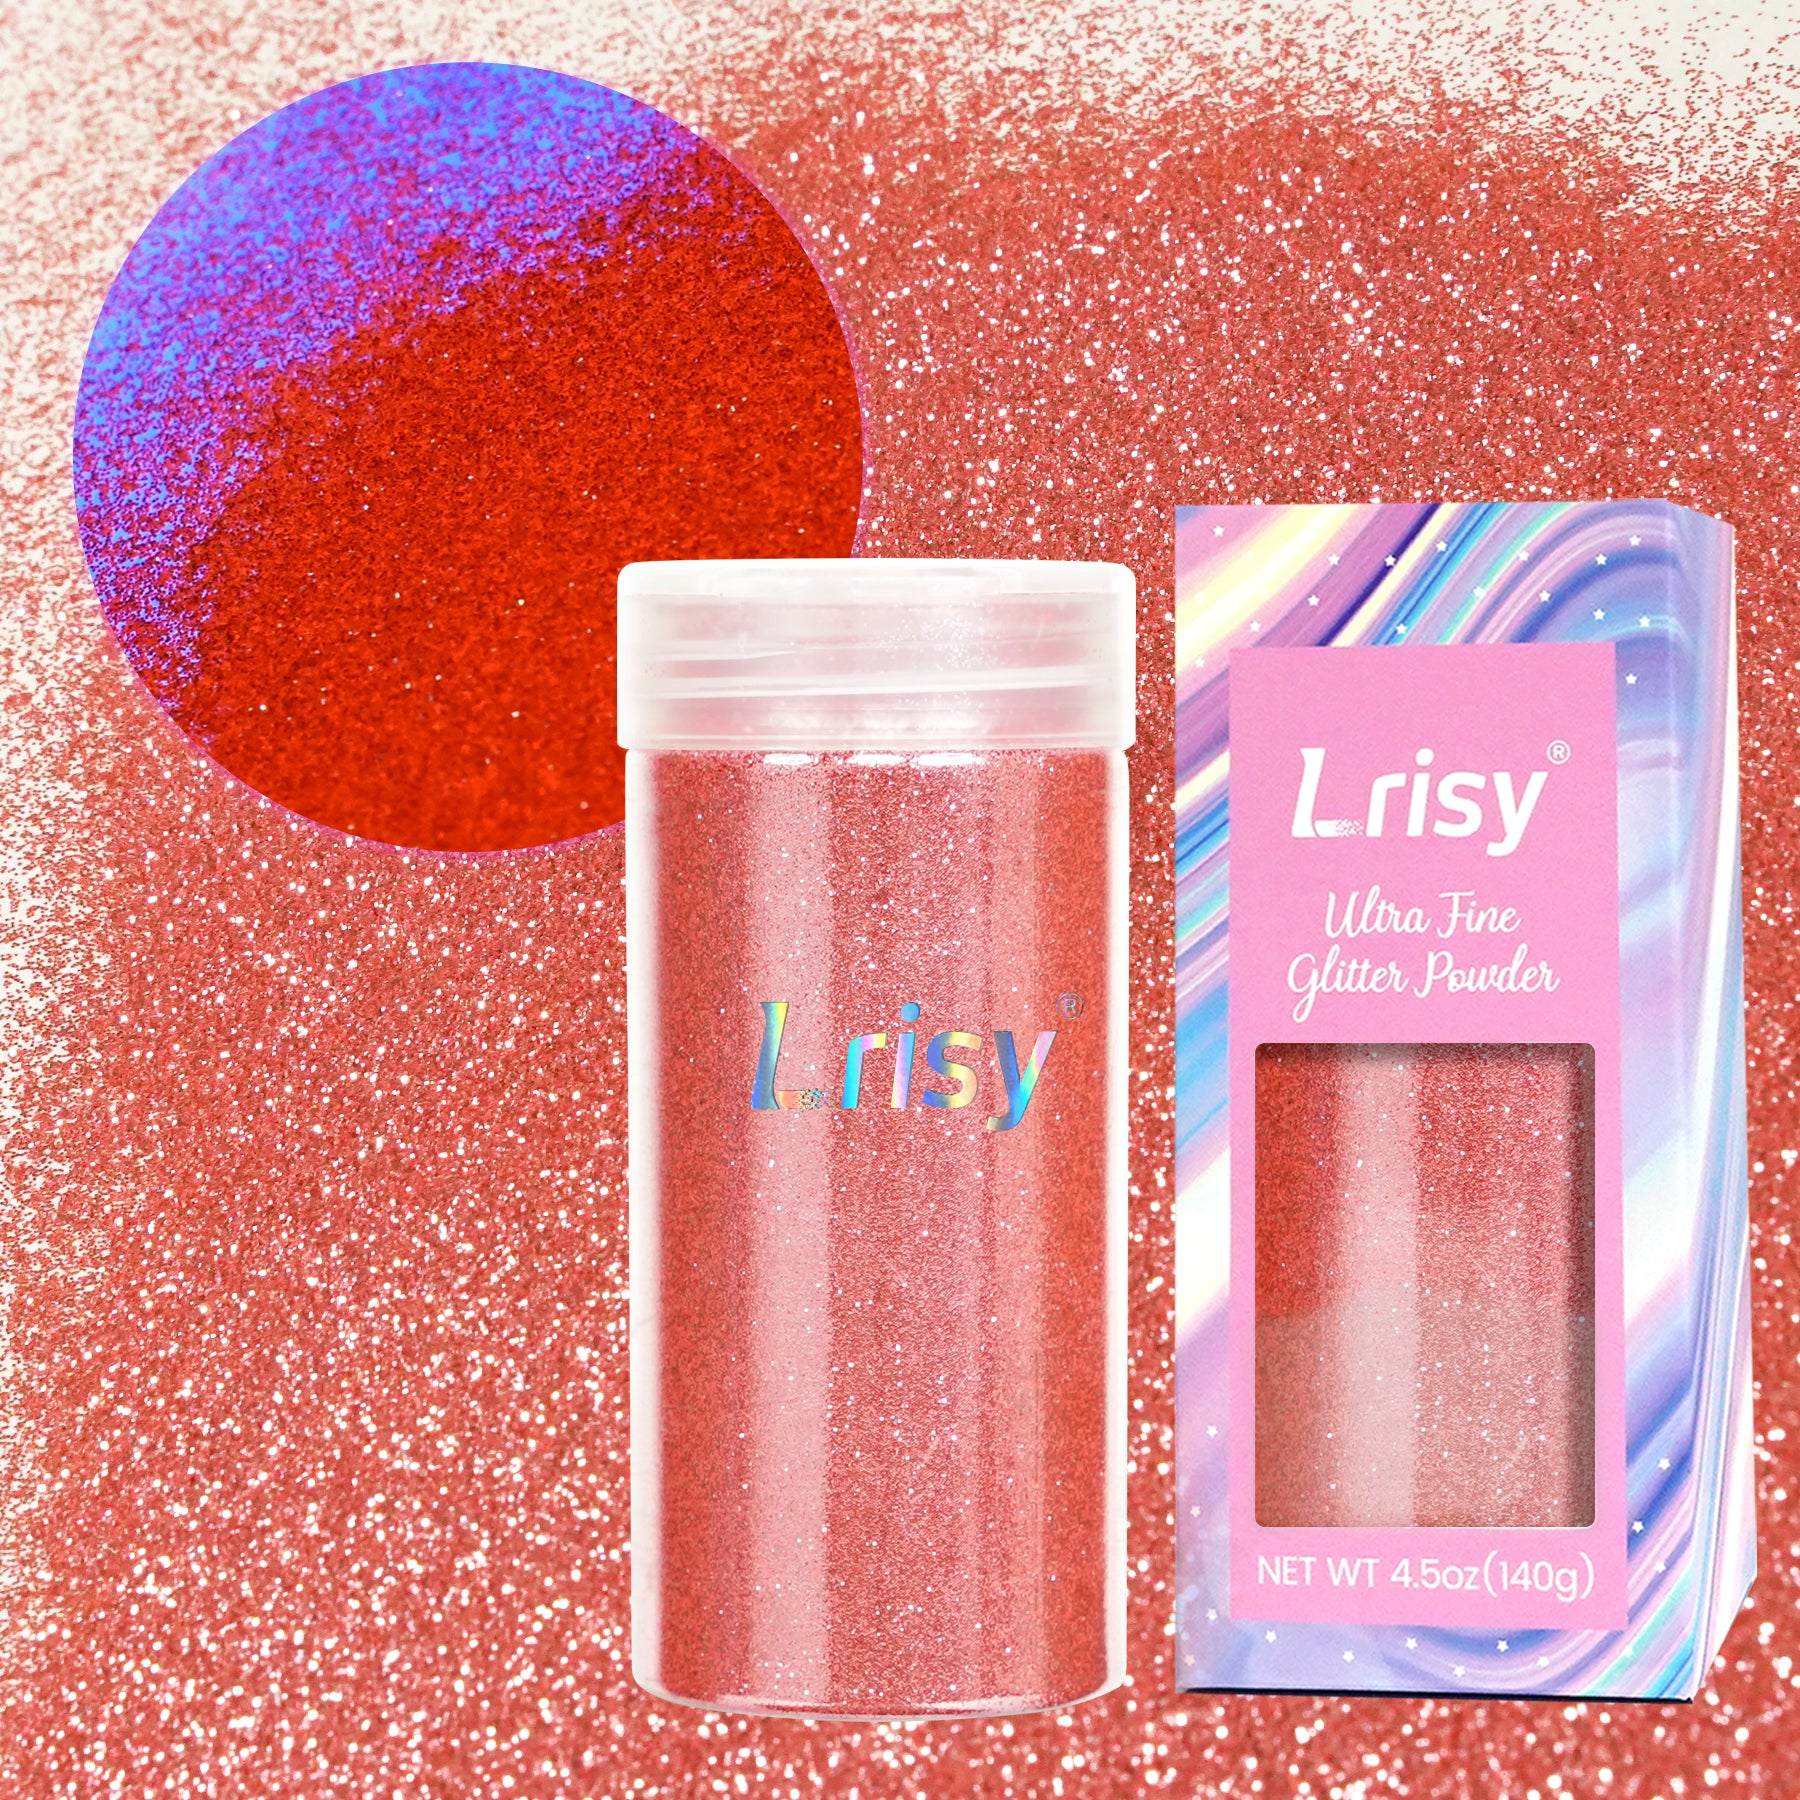 Lrisy Extra Fine Neon Punk Metallic Glitter Powder with Shaker Lid 140g/4.5oz (Punk Pale Violet Red)